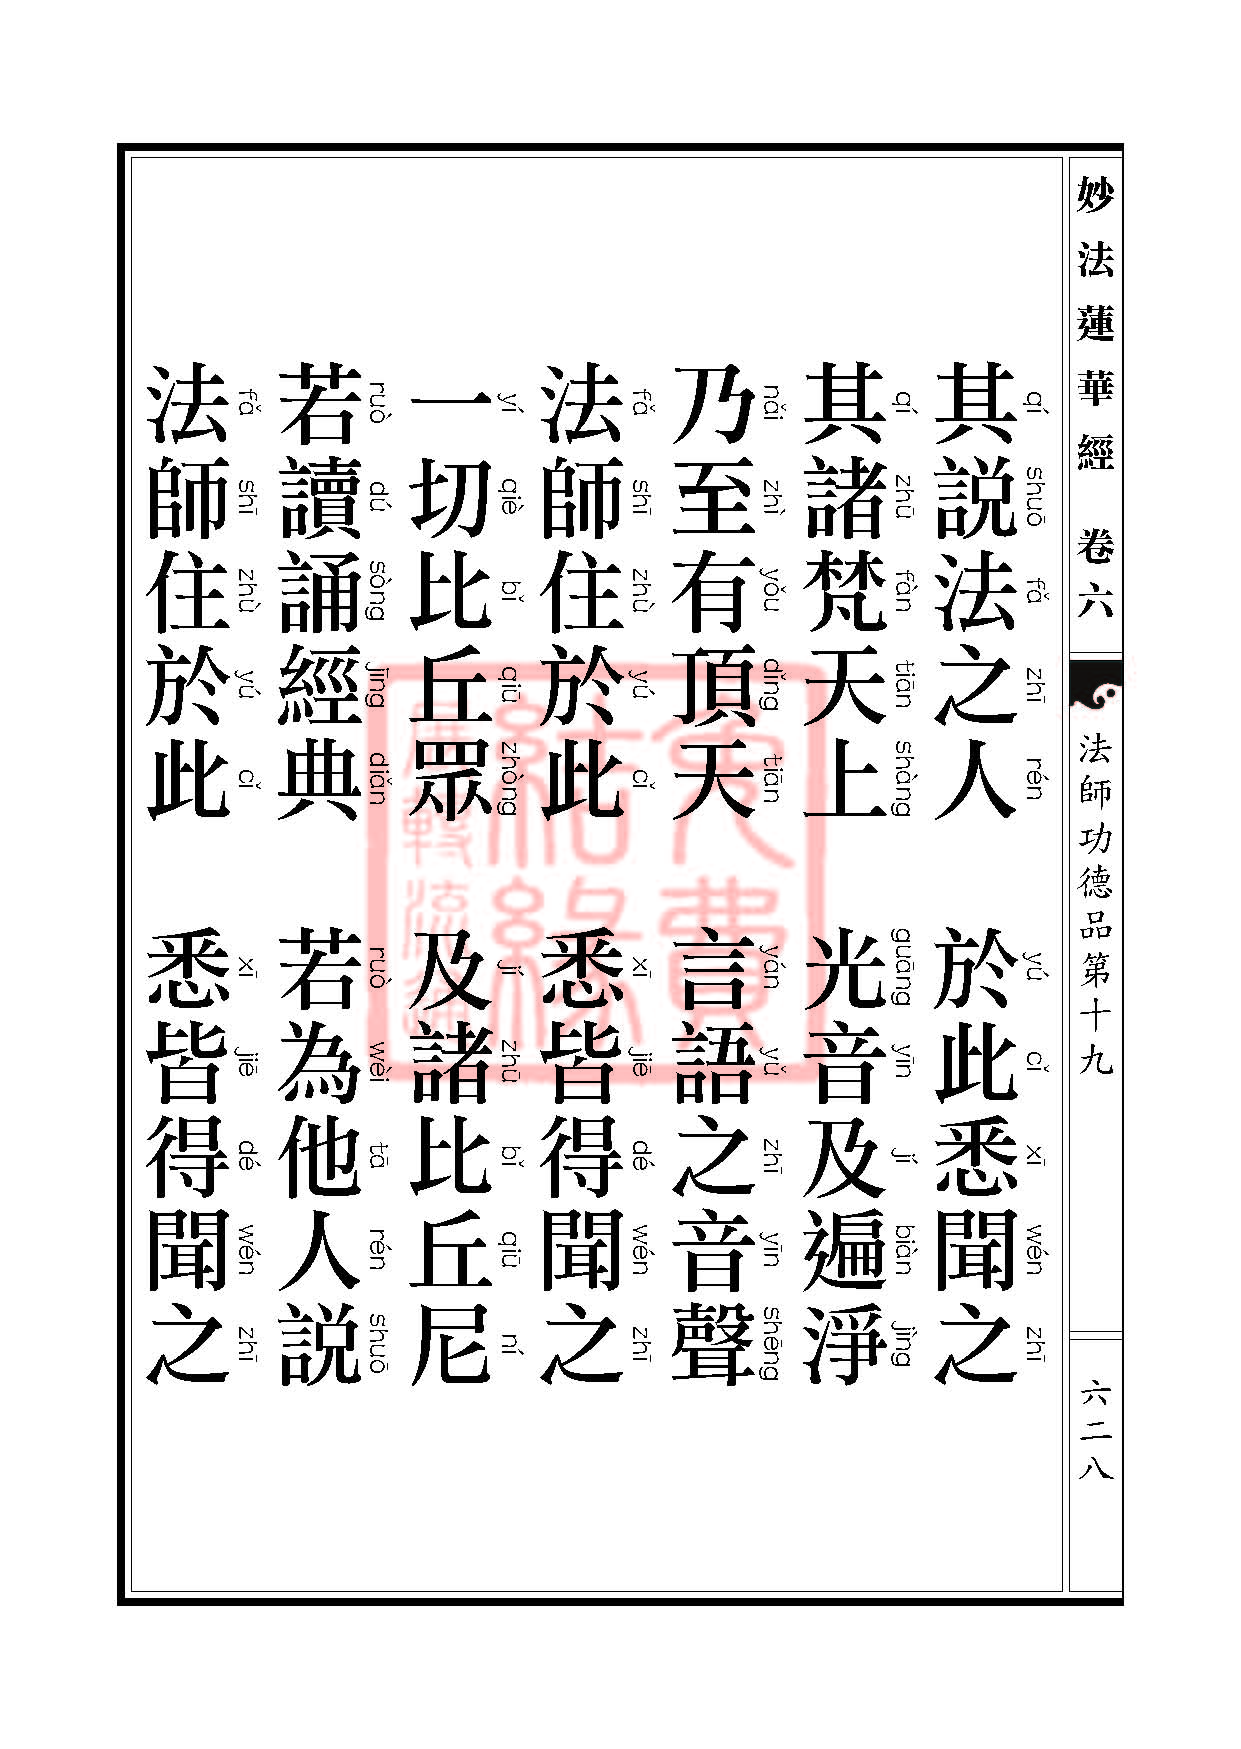 Book_FHJ_HK-A6-PY_Web__628.jpg